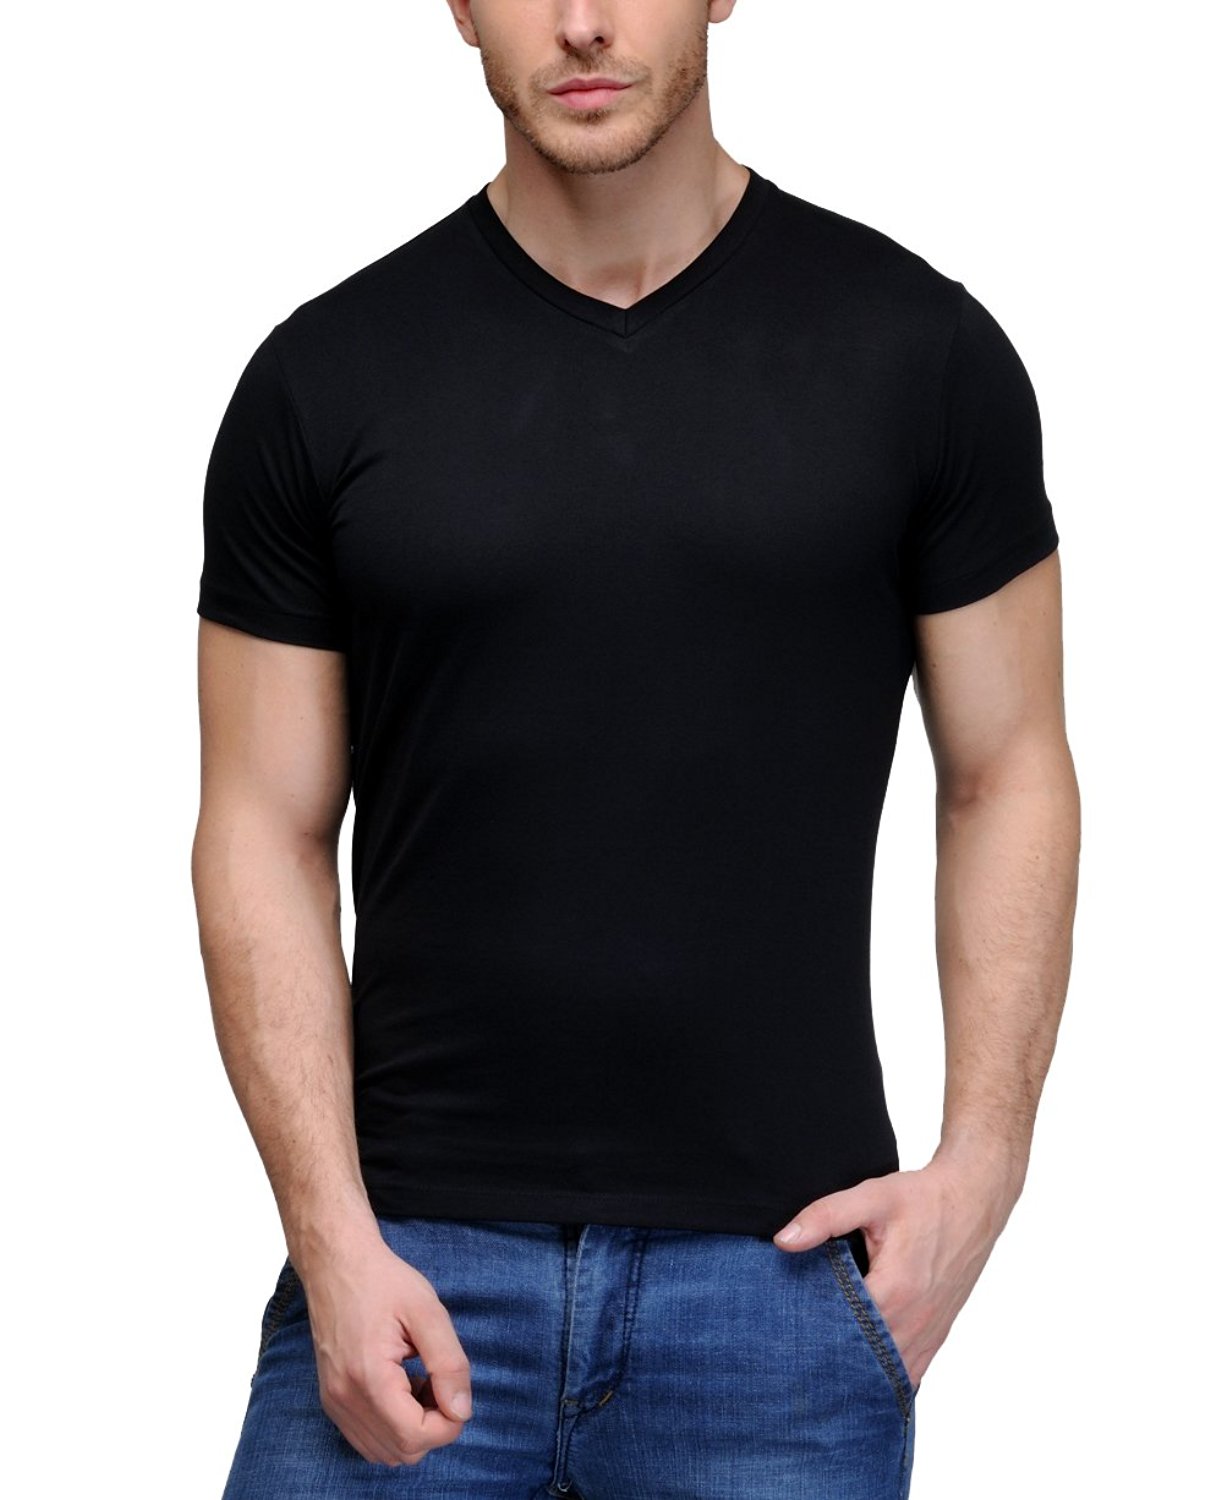 Buy Cotton V Neck T-shirt - Black Online @ ₹1099 from ShopClues